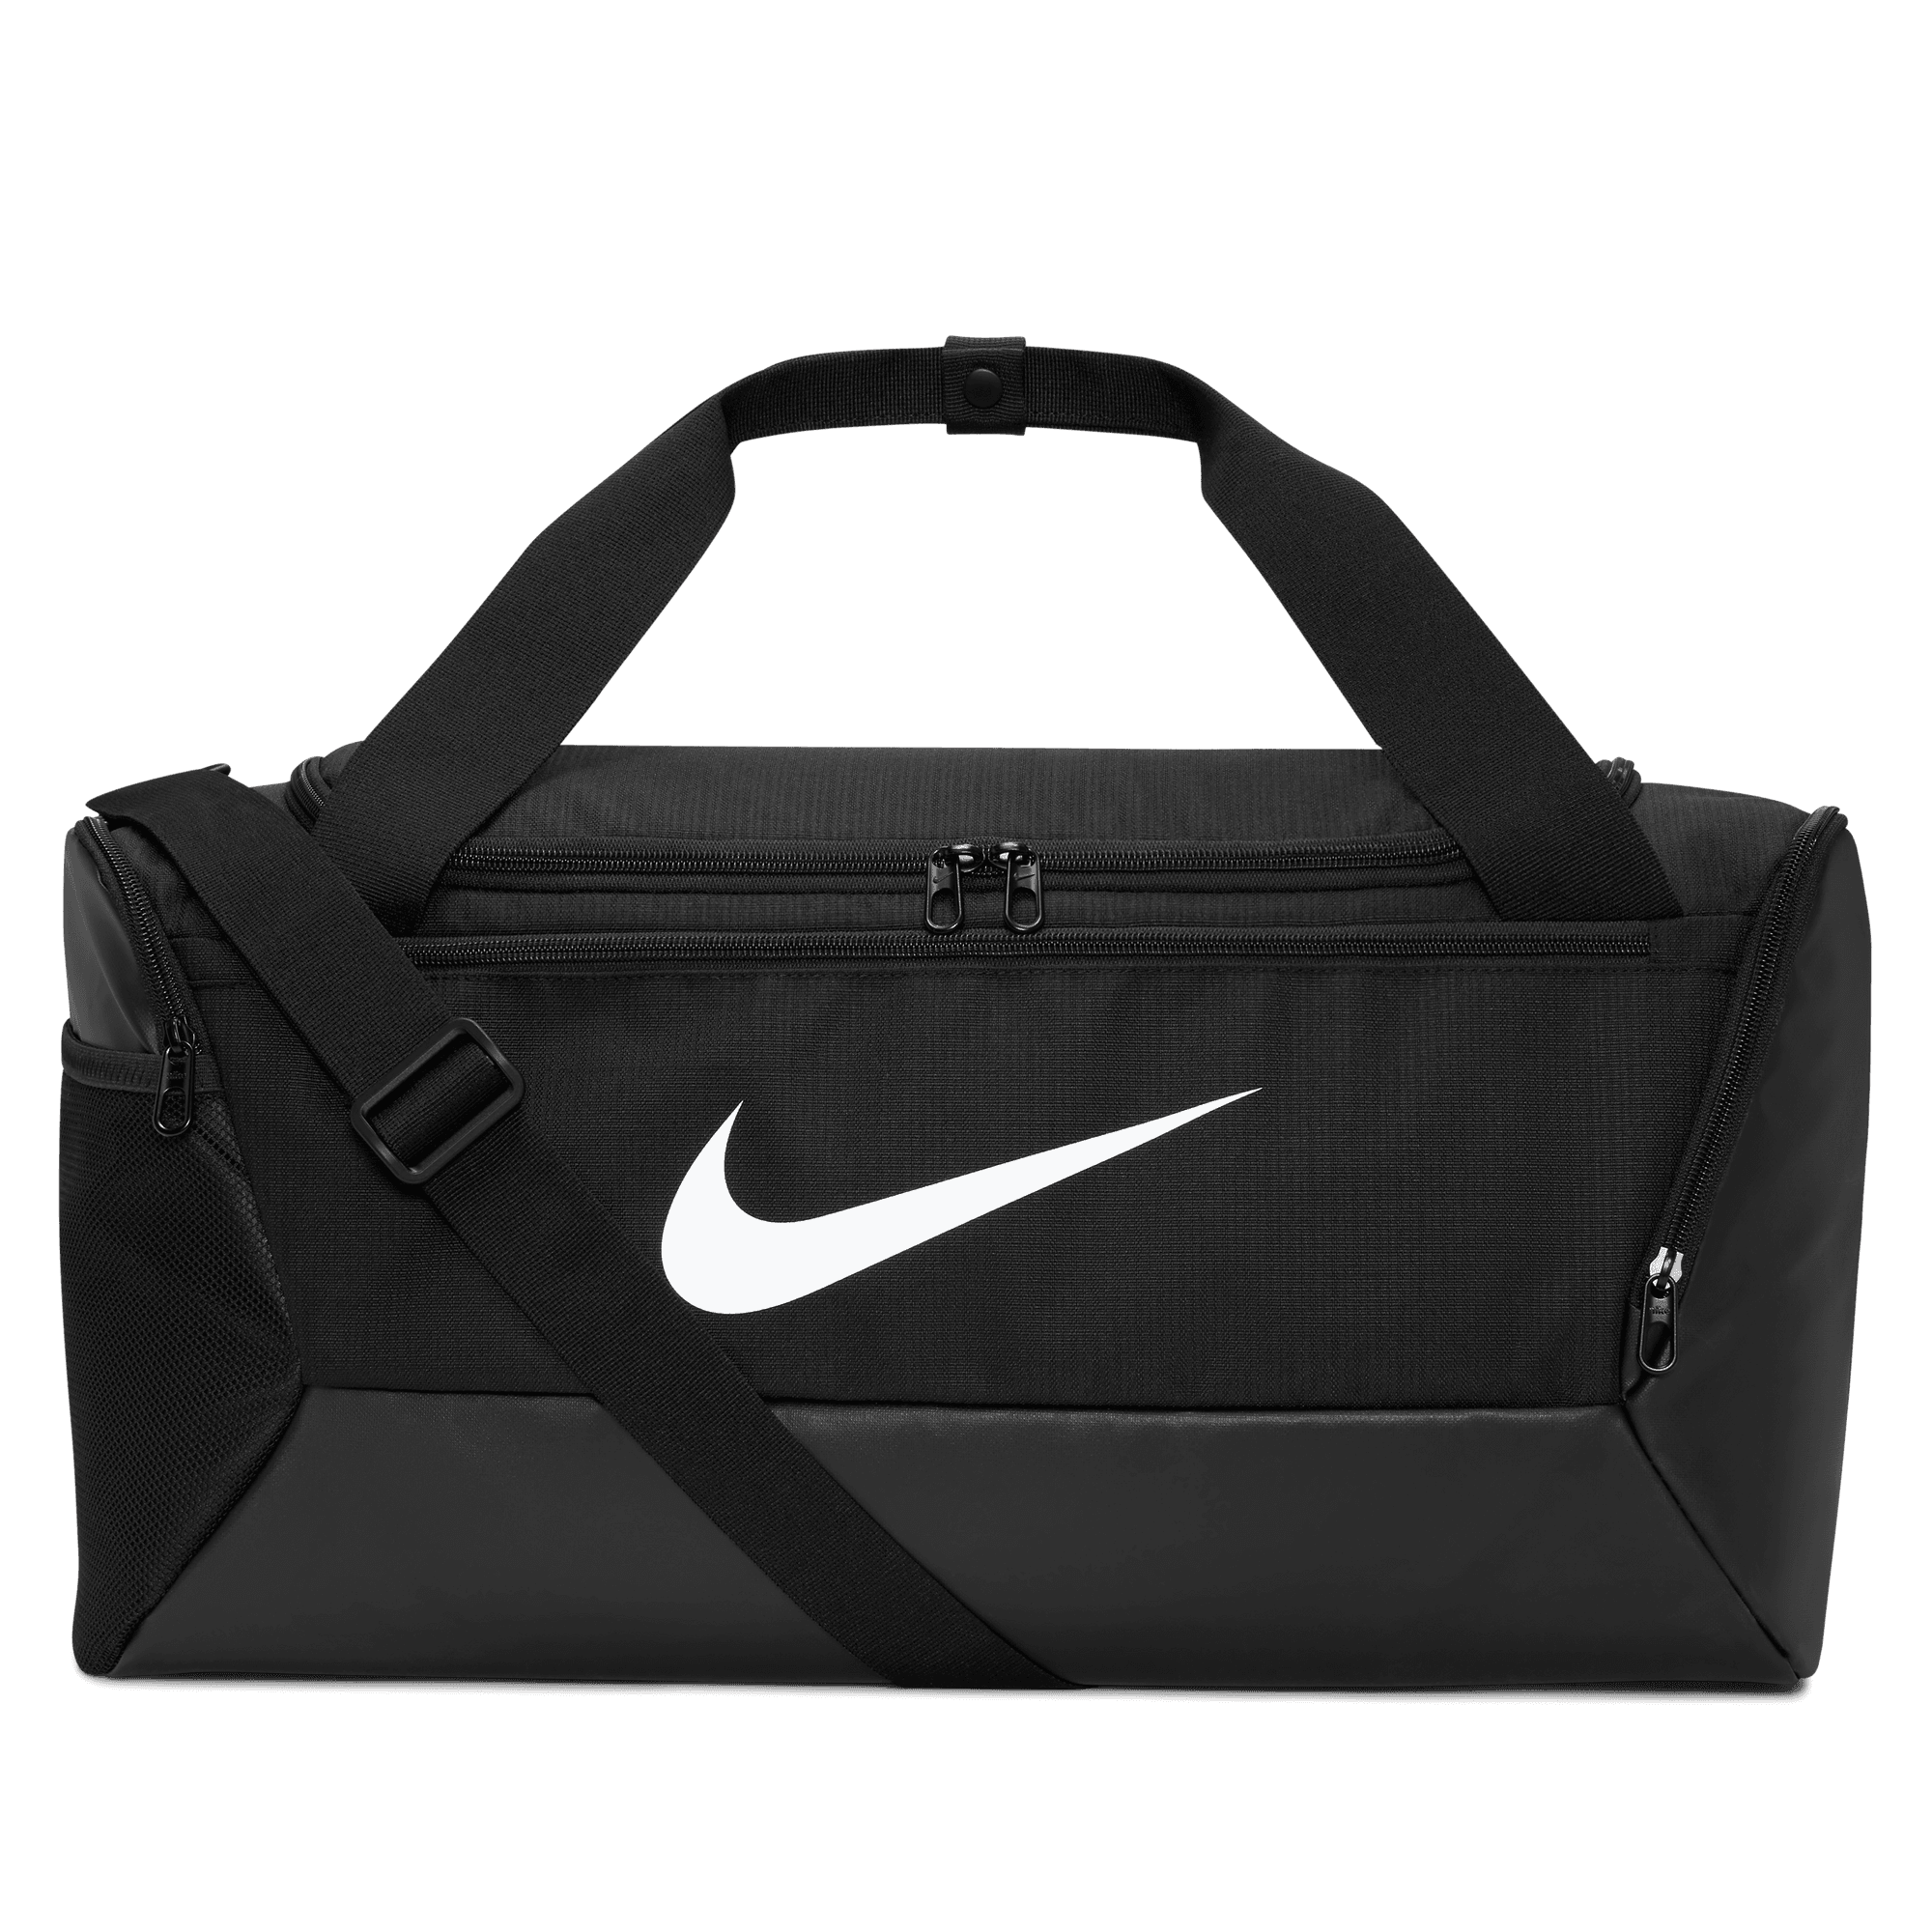 Nike Brasilia 9.5 Training Duffel Bag (Small, 41L) - Geode Teal